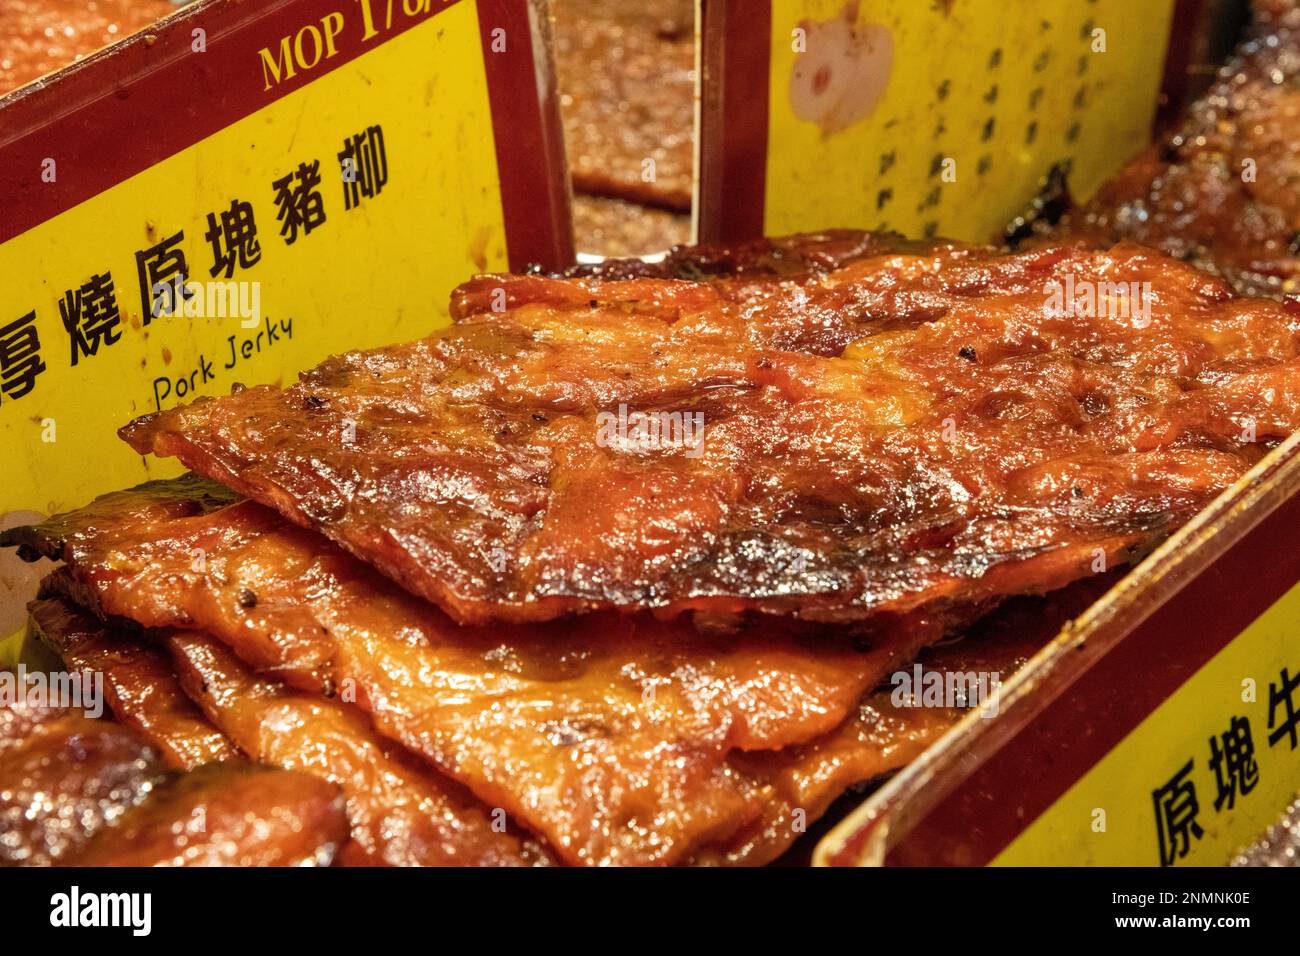 Shop selling the famous Macau pork jerky, Macau, China. Stock Photo